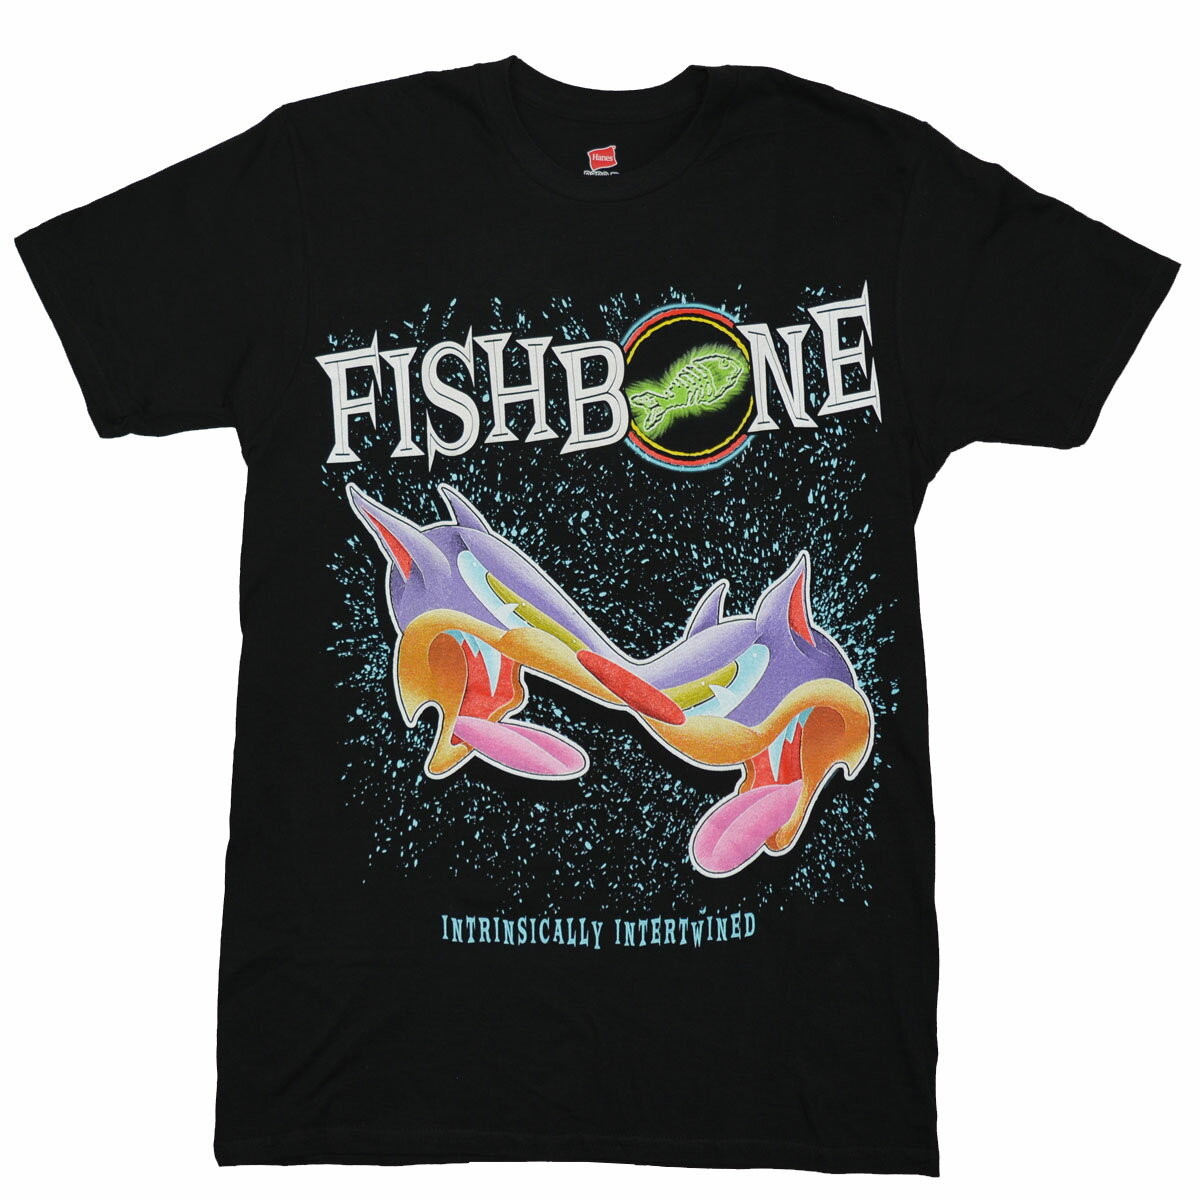 FISHBONE フィッシュボーン Intrinsically Intertwined Tシャツ